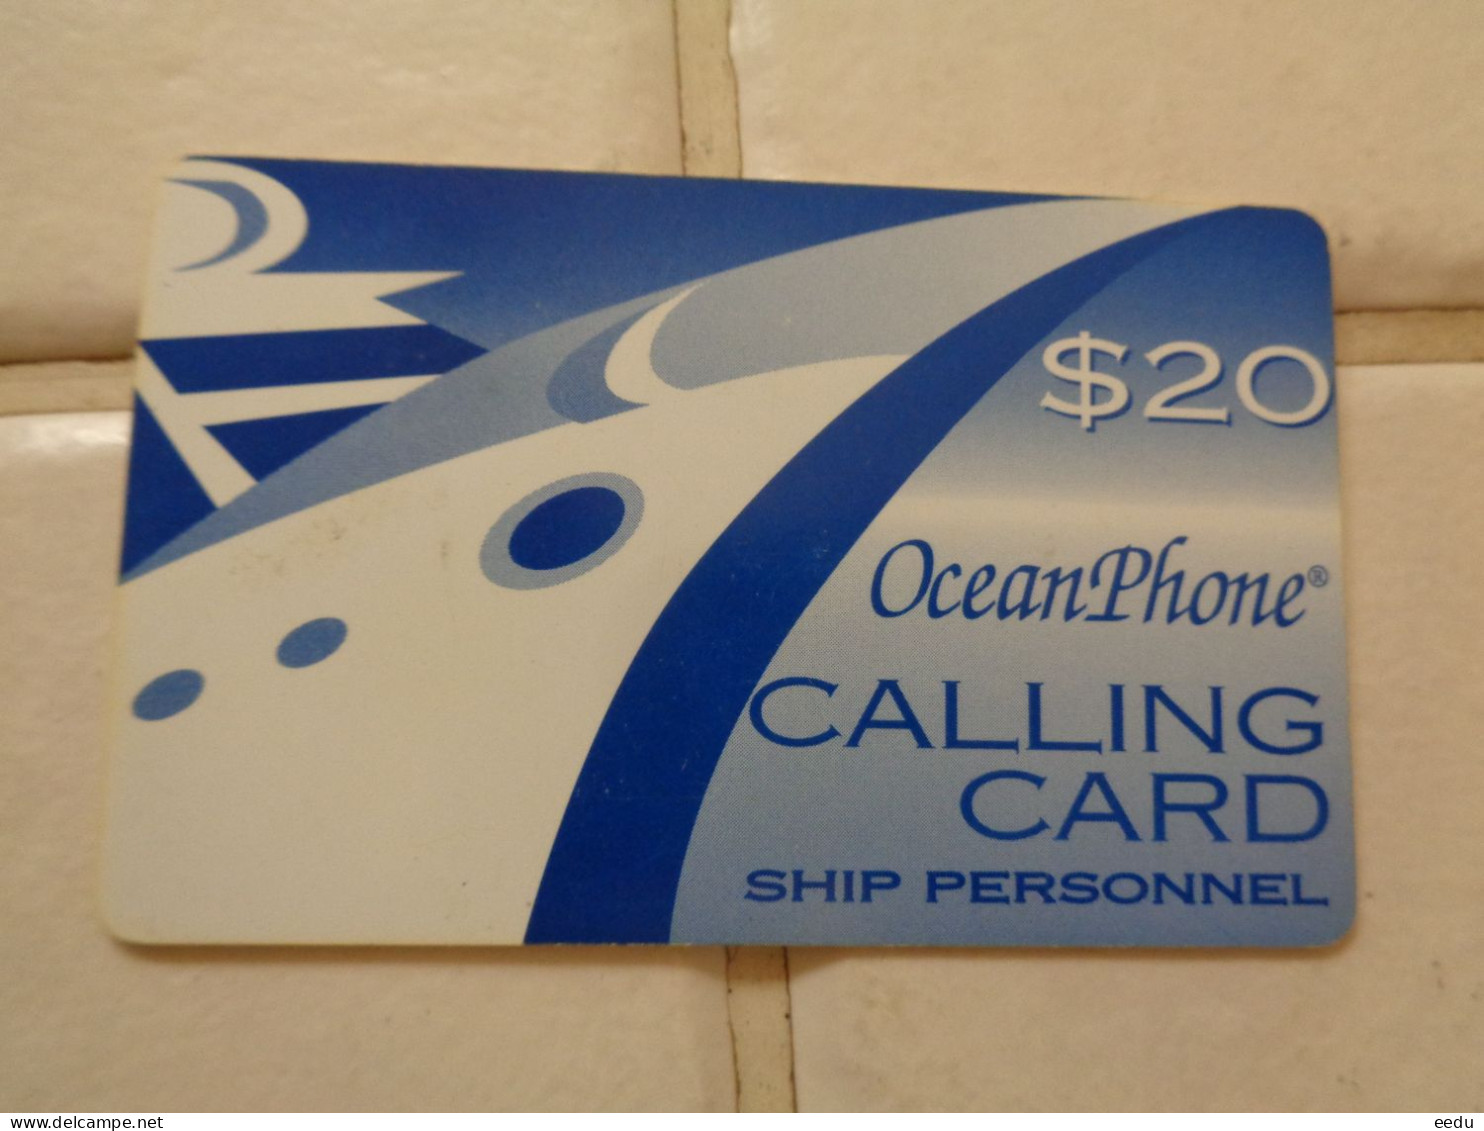 US Virgin Islands Phonecard - Virgin Islands